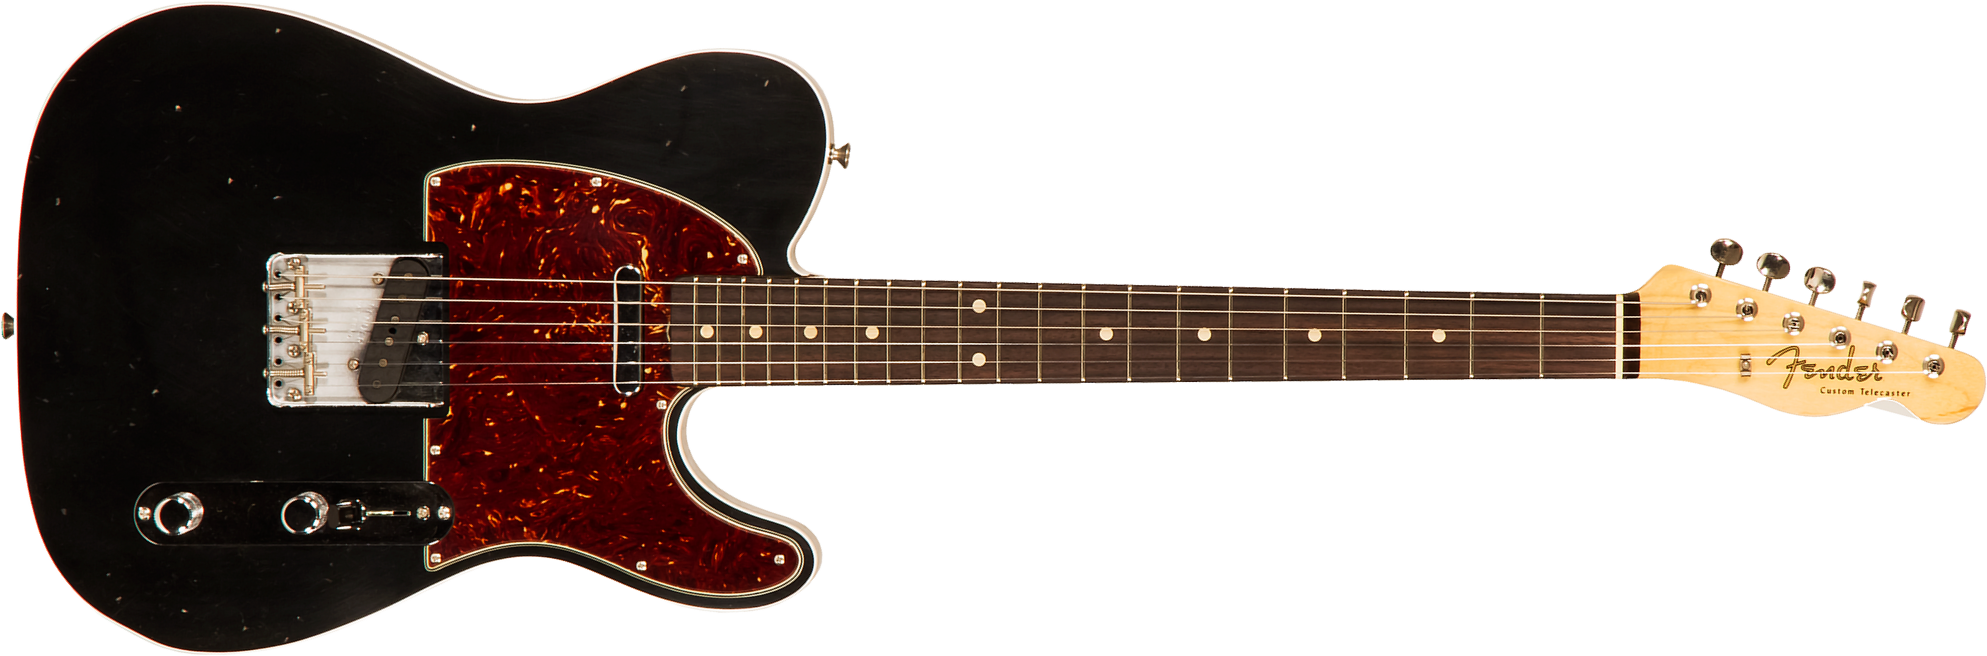 Fender Custom Shop Tele 1960 2s Ht Rw #r114759 - Journeyman Relic Black - Televorm elektrische gitaar - Main picture